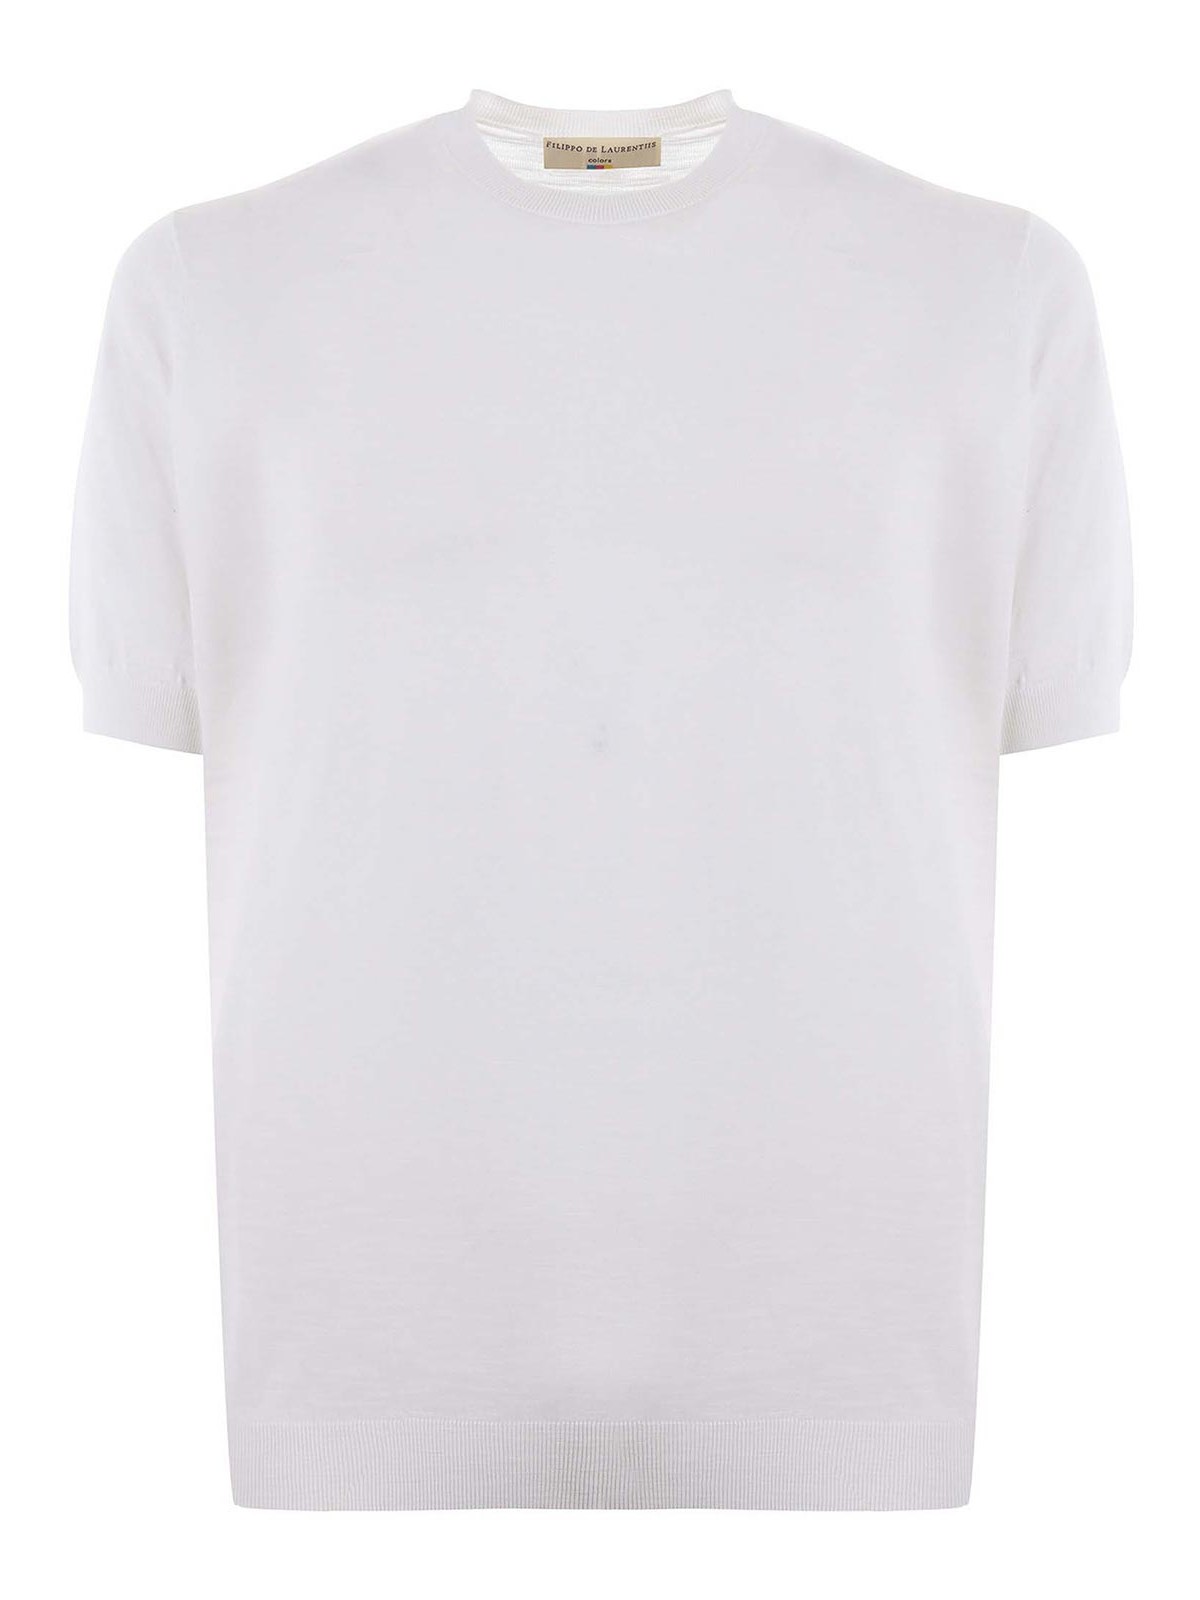 Filippo De Laurentiis Milky White T-shirt In Cotton Thread